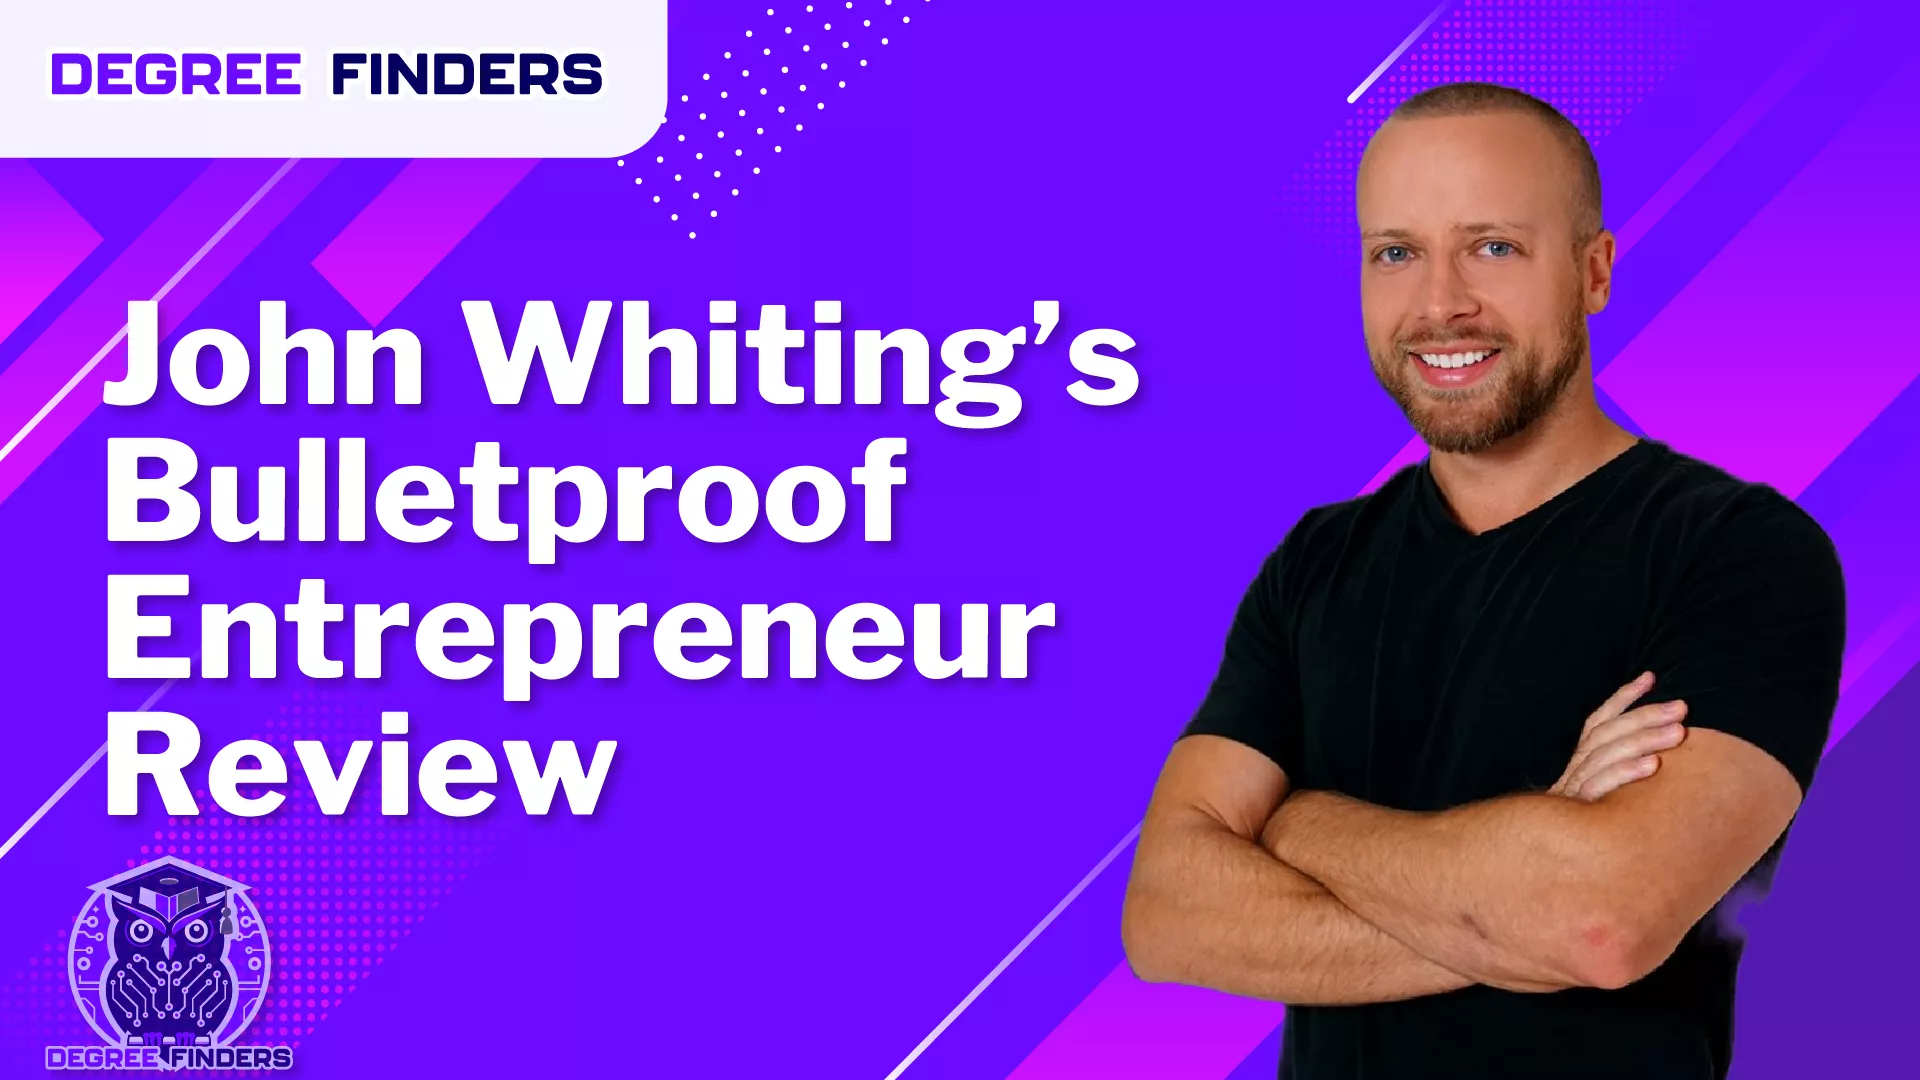 John Whiting’s Bulletproof Entrepreneur Review